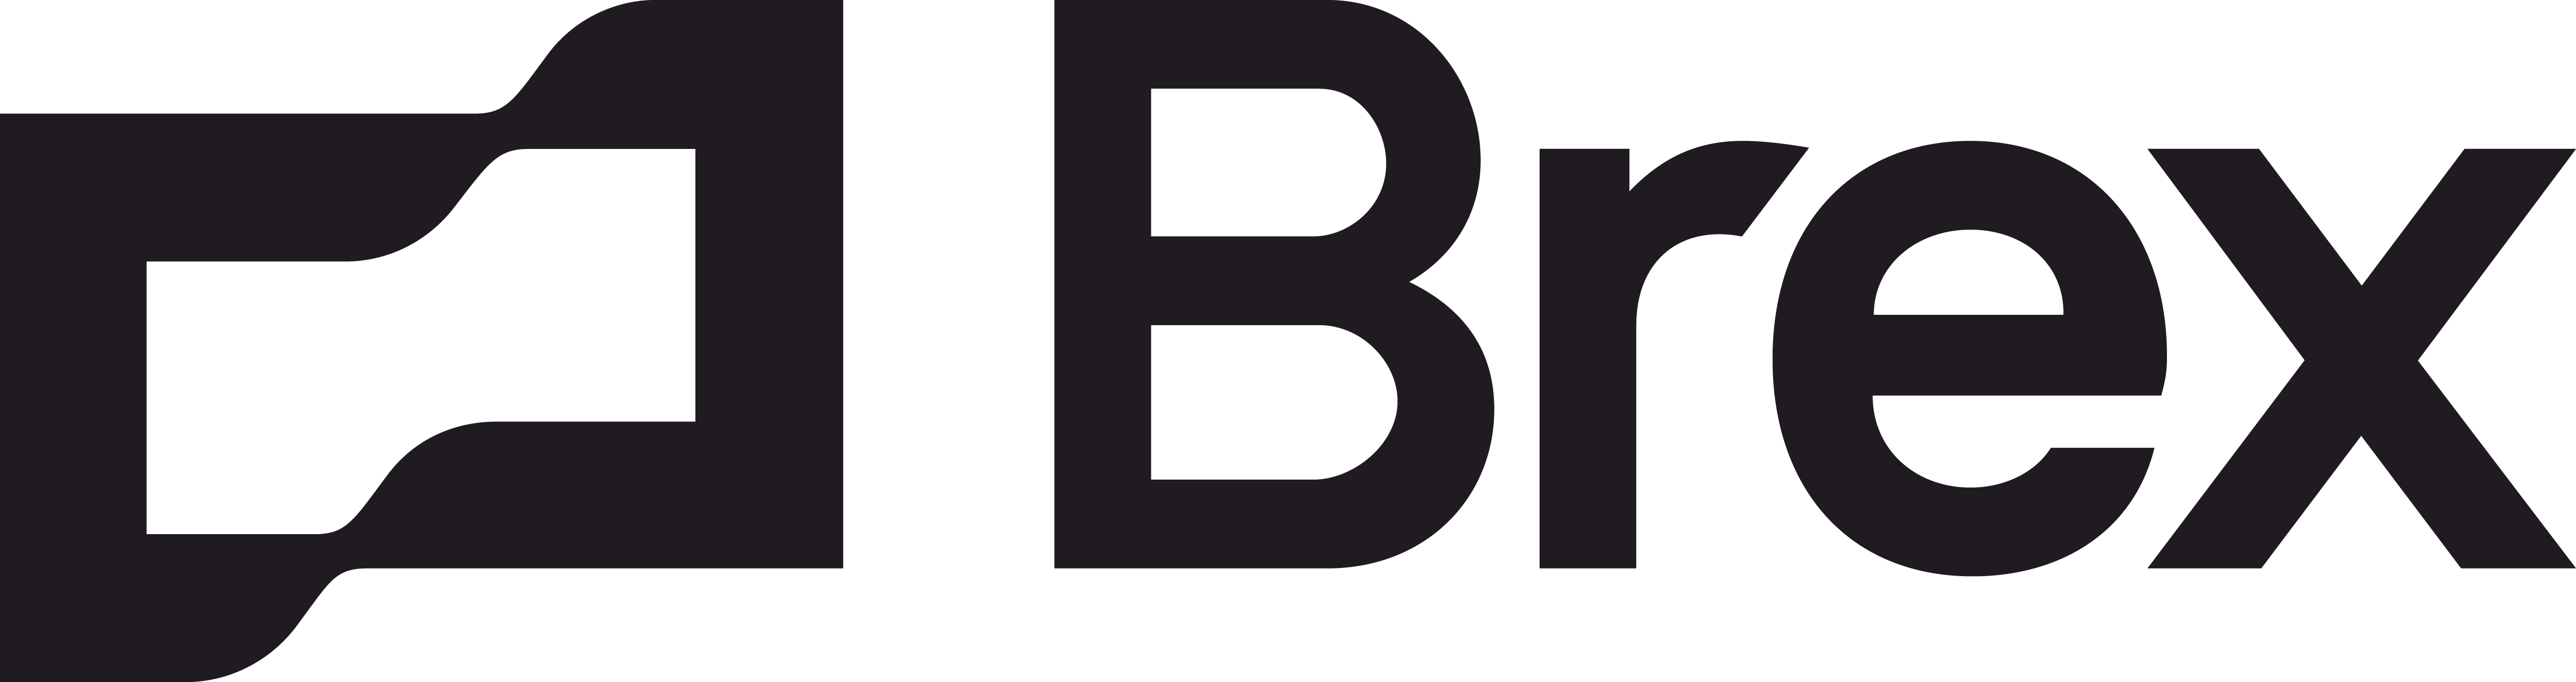 Brex_Inc._Corporate_Logo